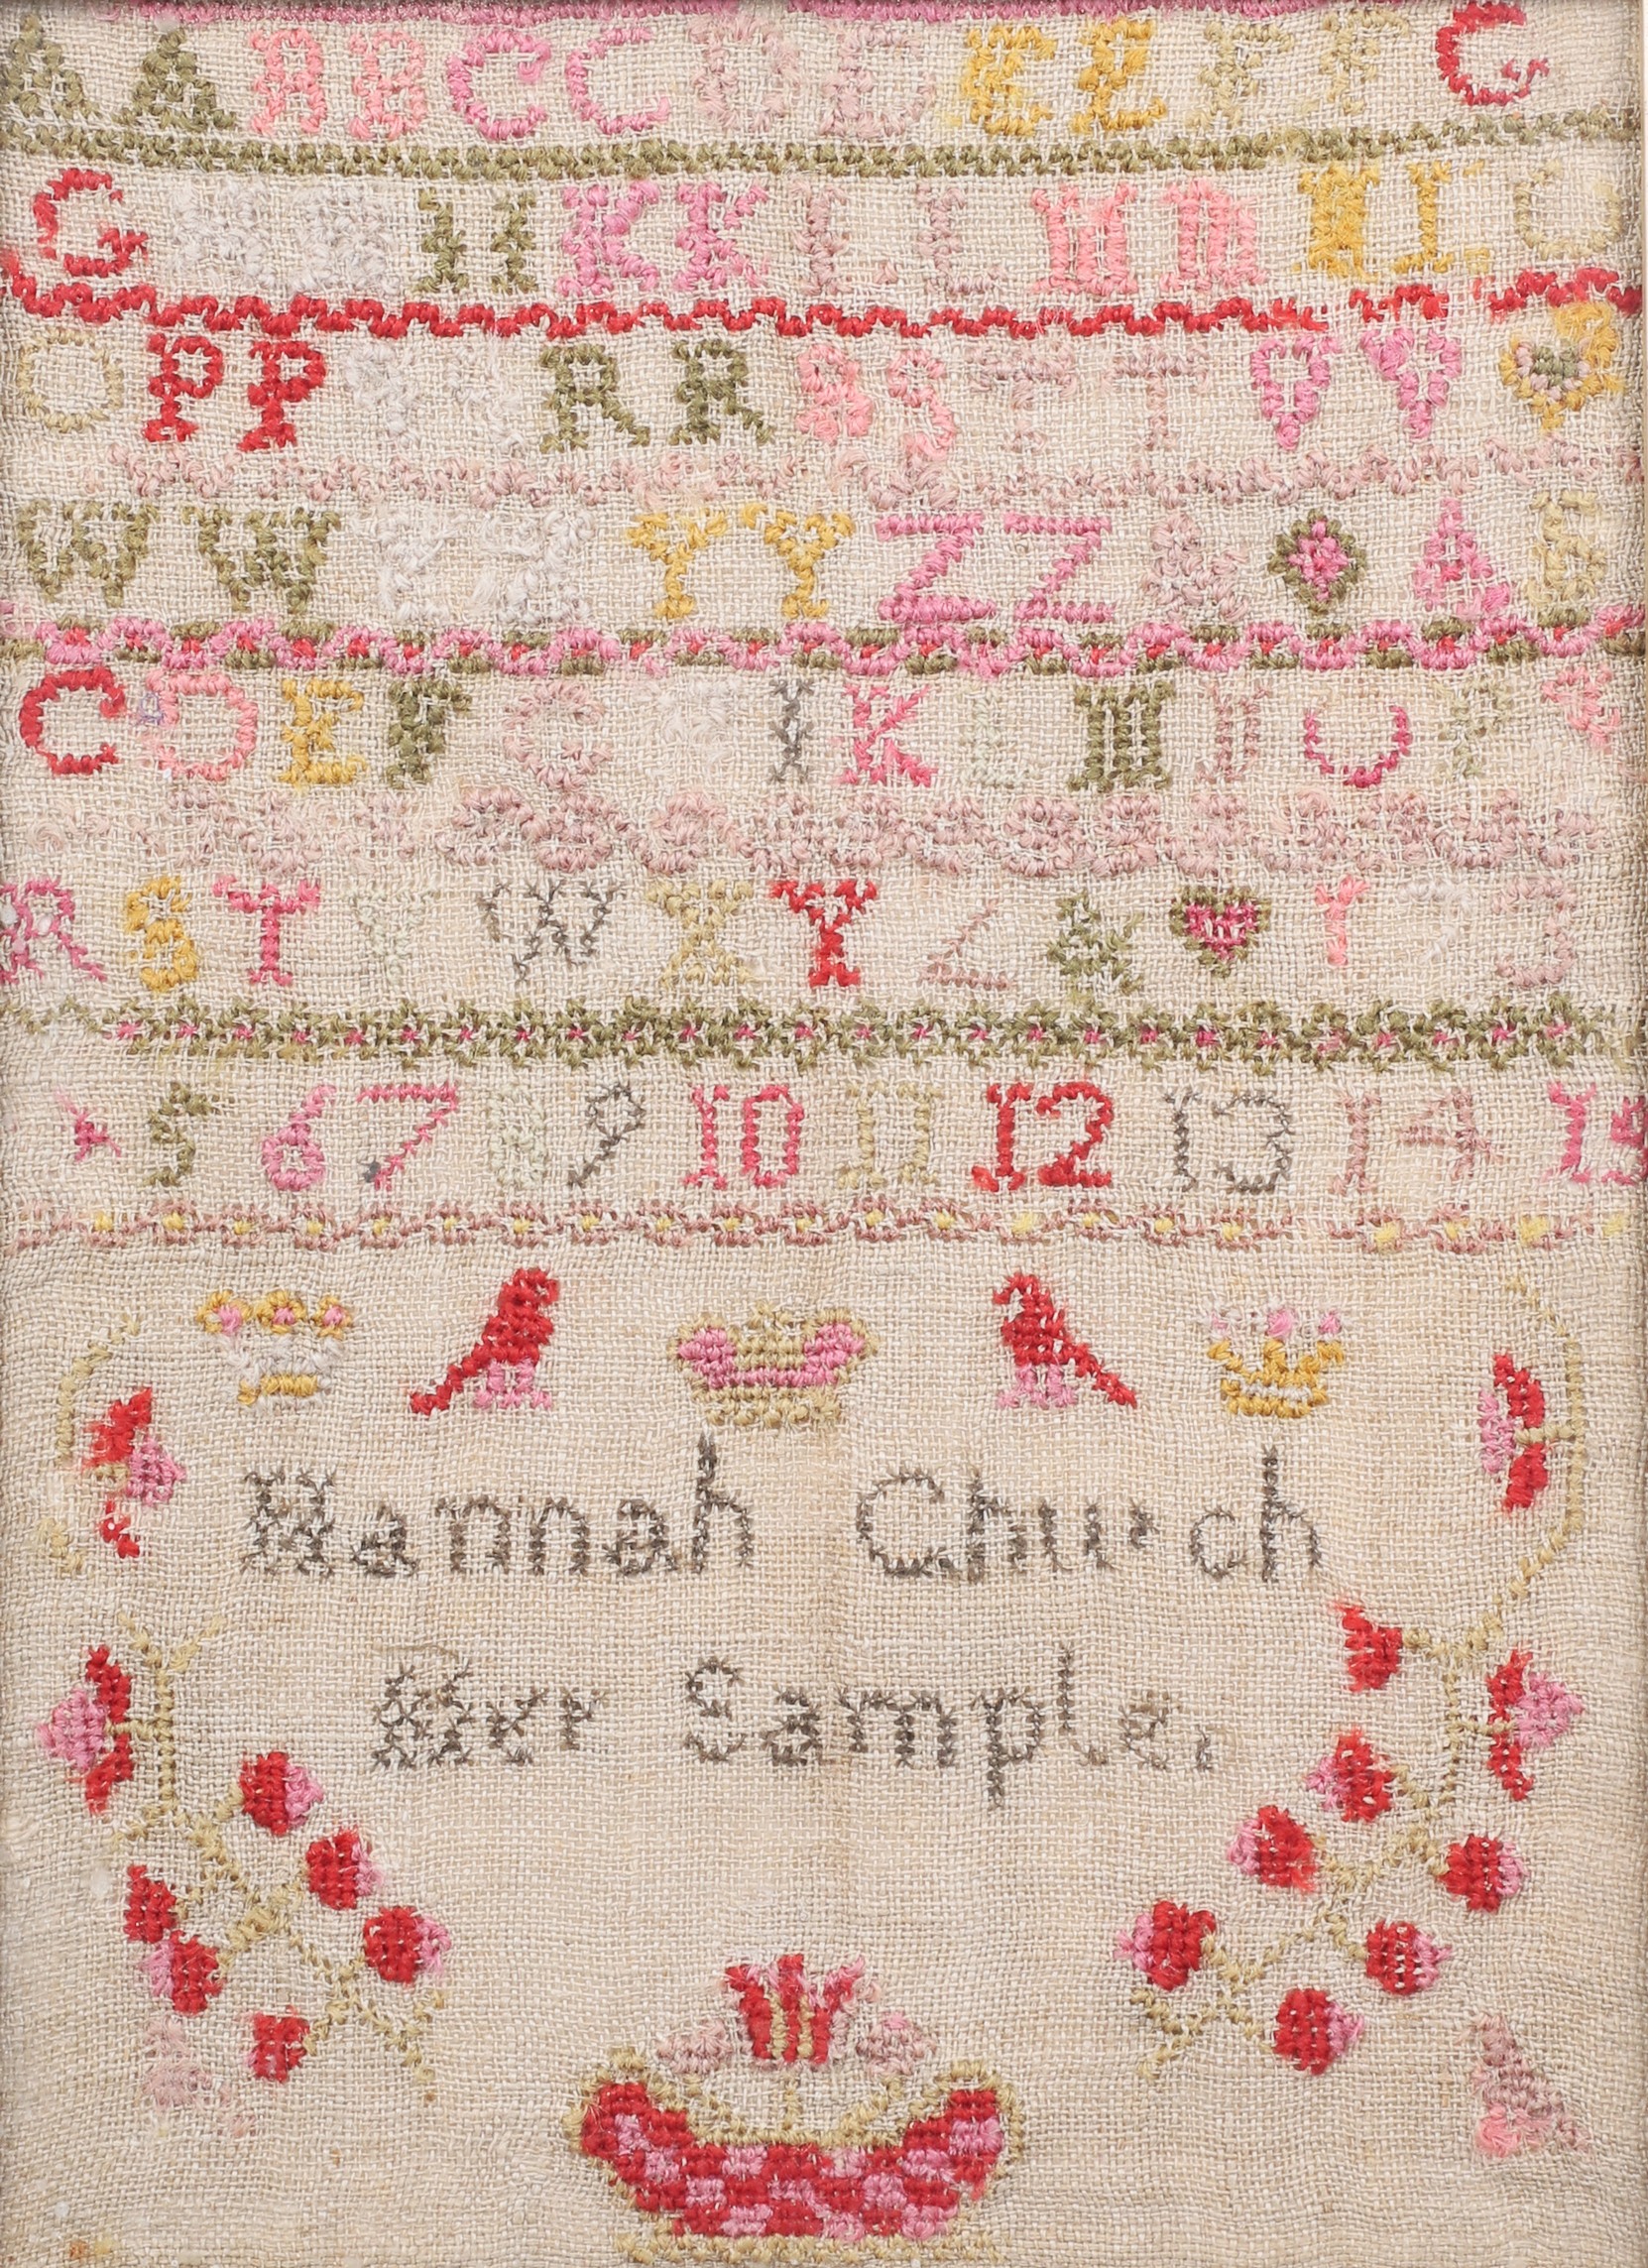 Cross stitch sampler, signed Hannah